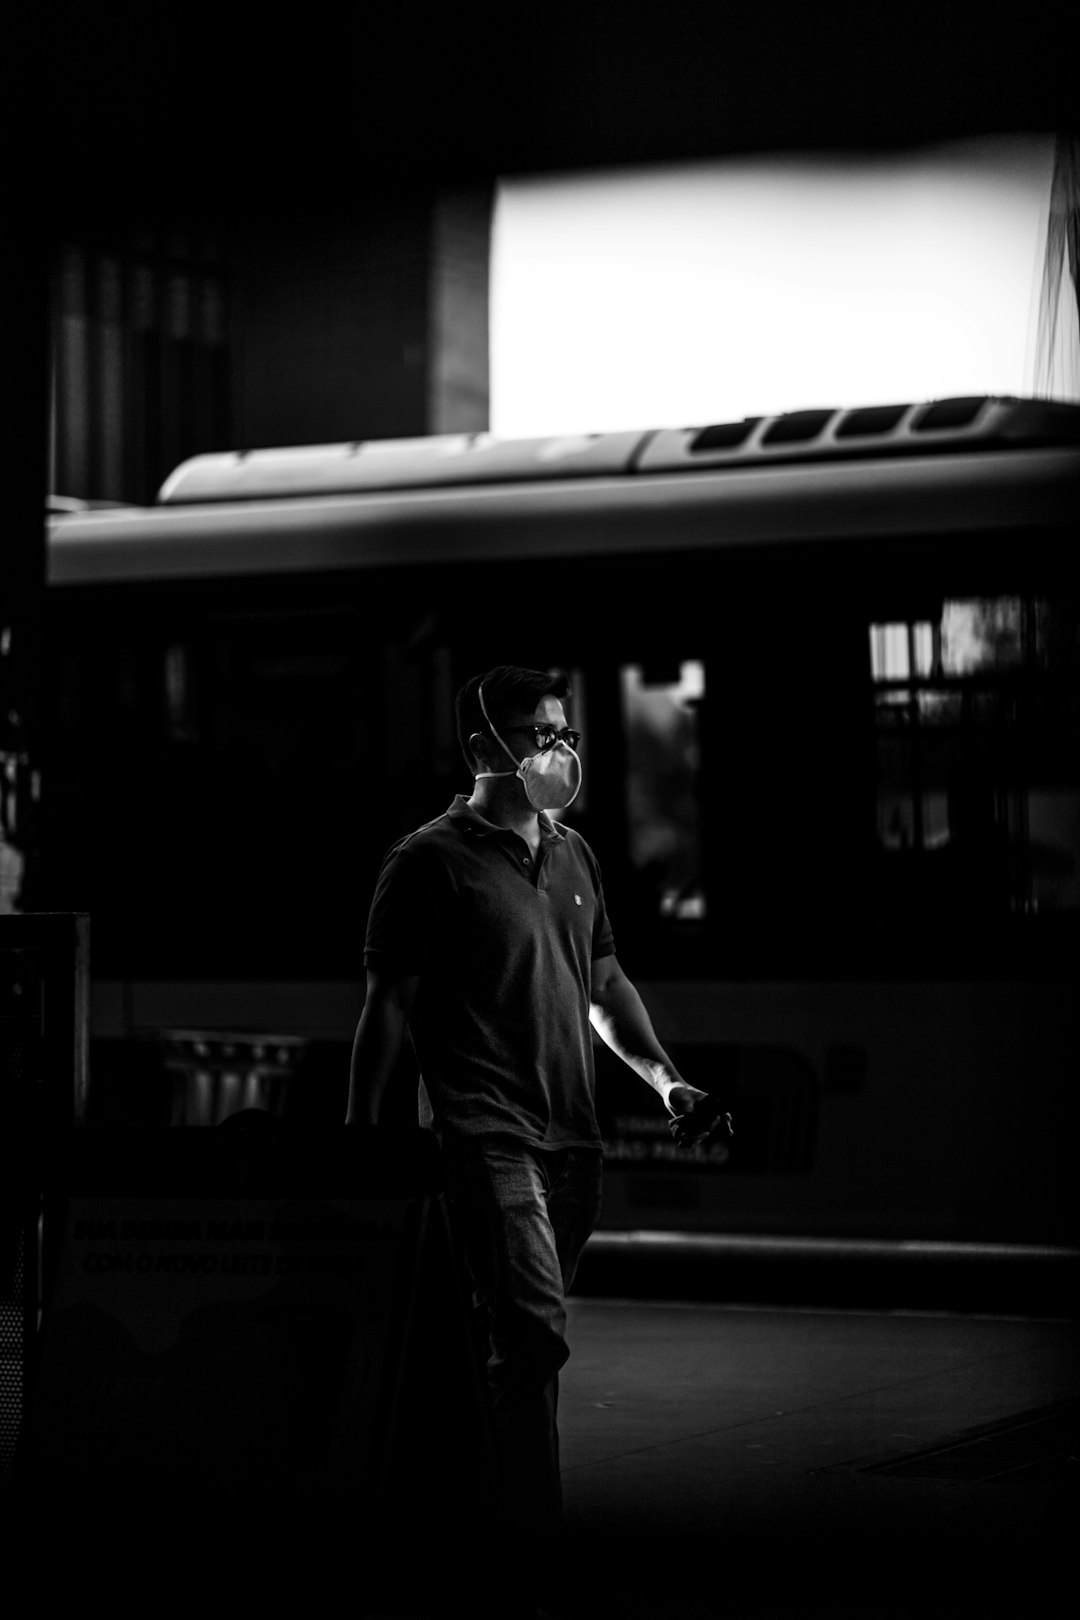 grayscale photo of man in black coat standing near train